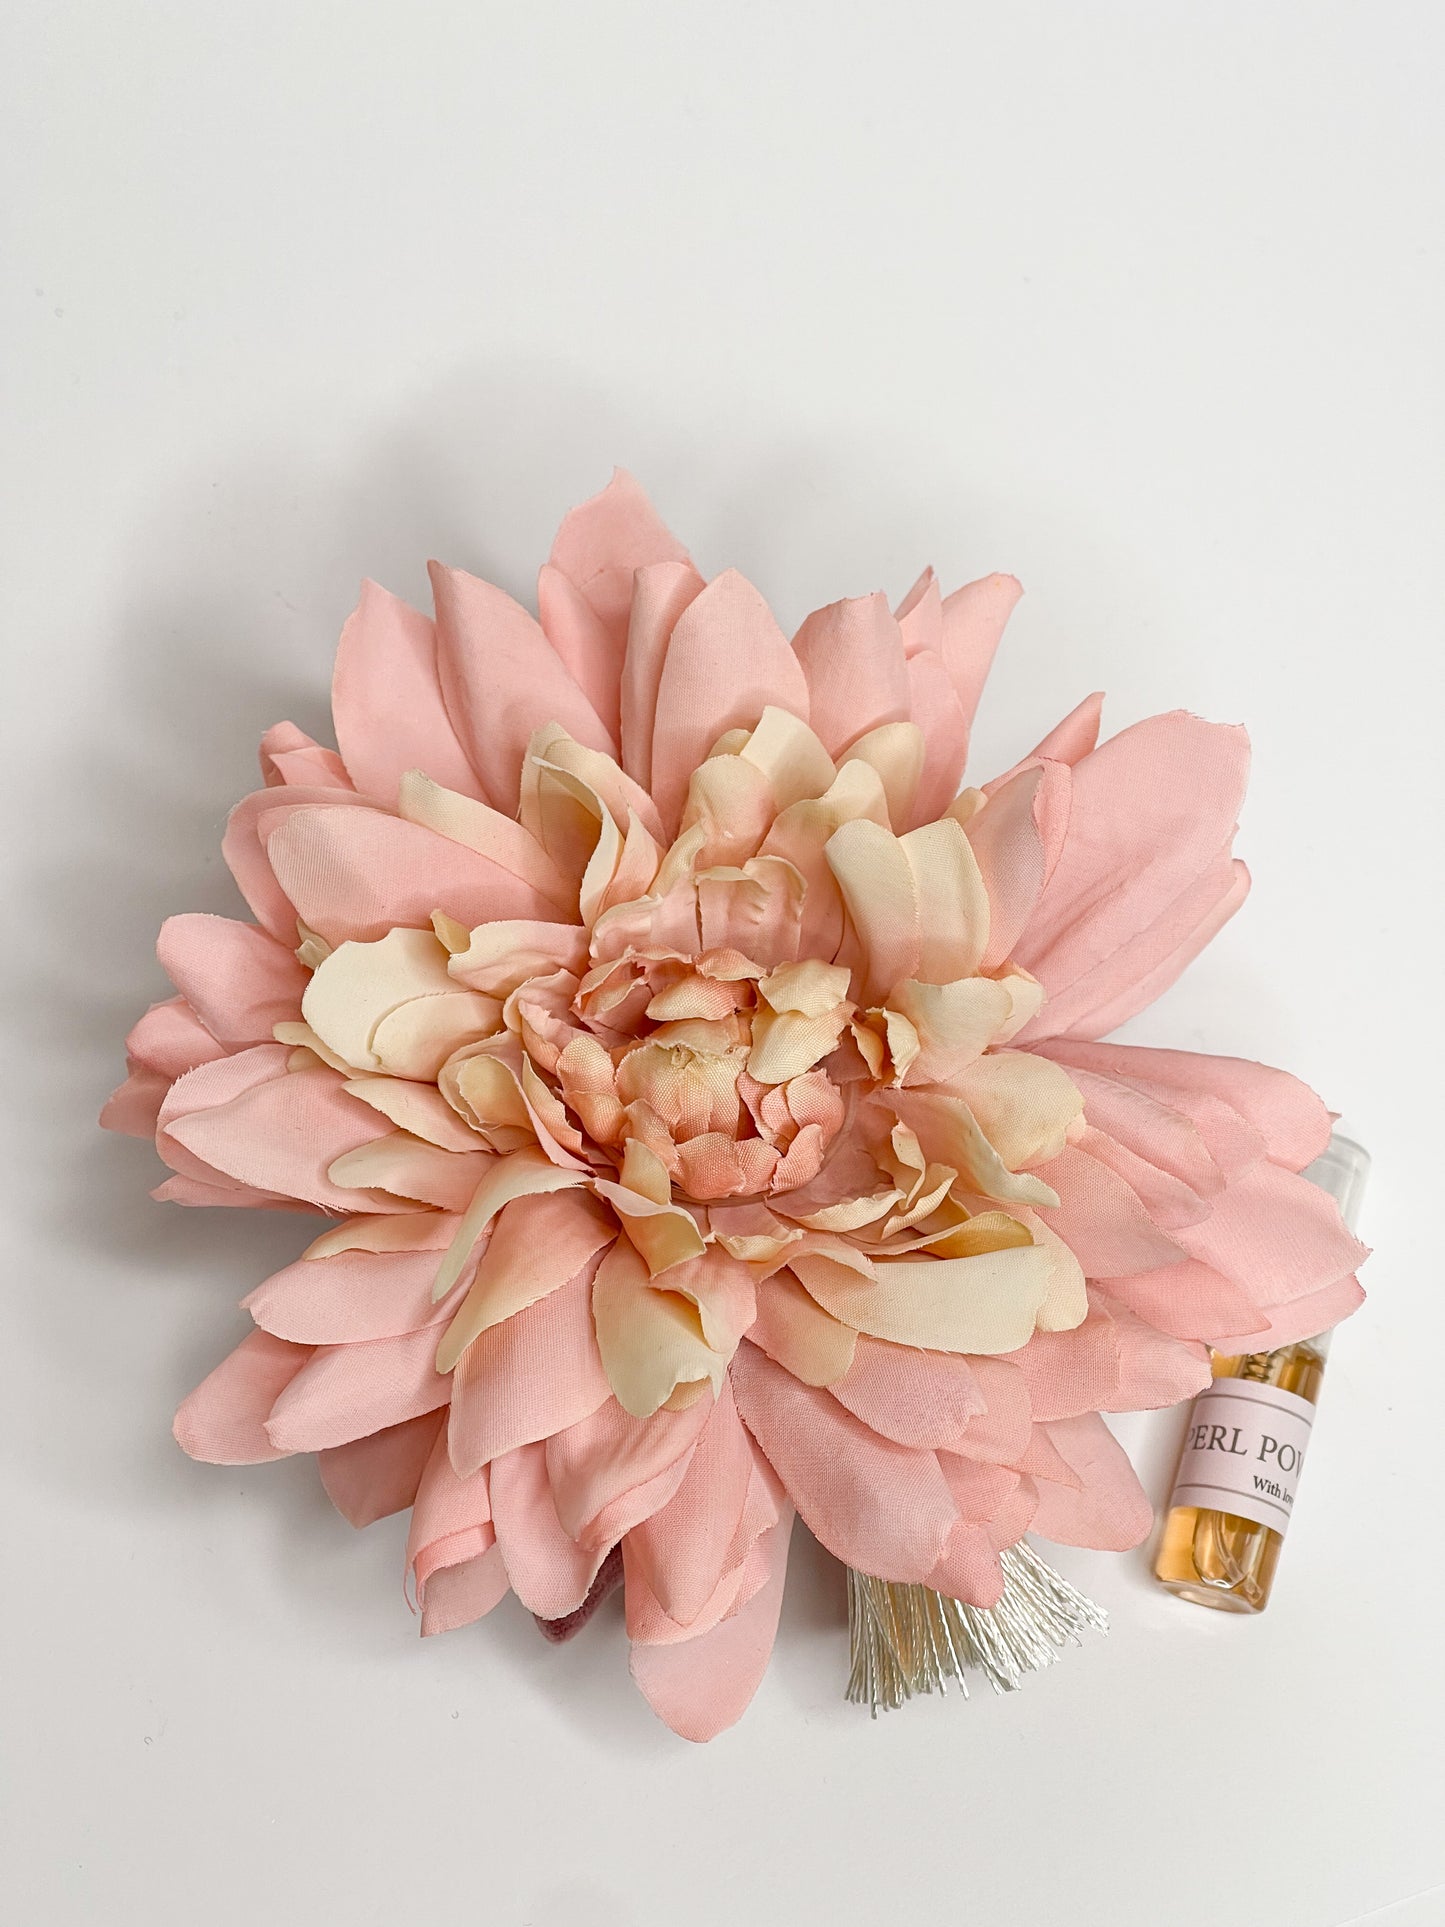 Home fragrance "Peach blossom"